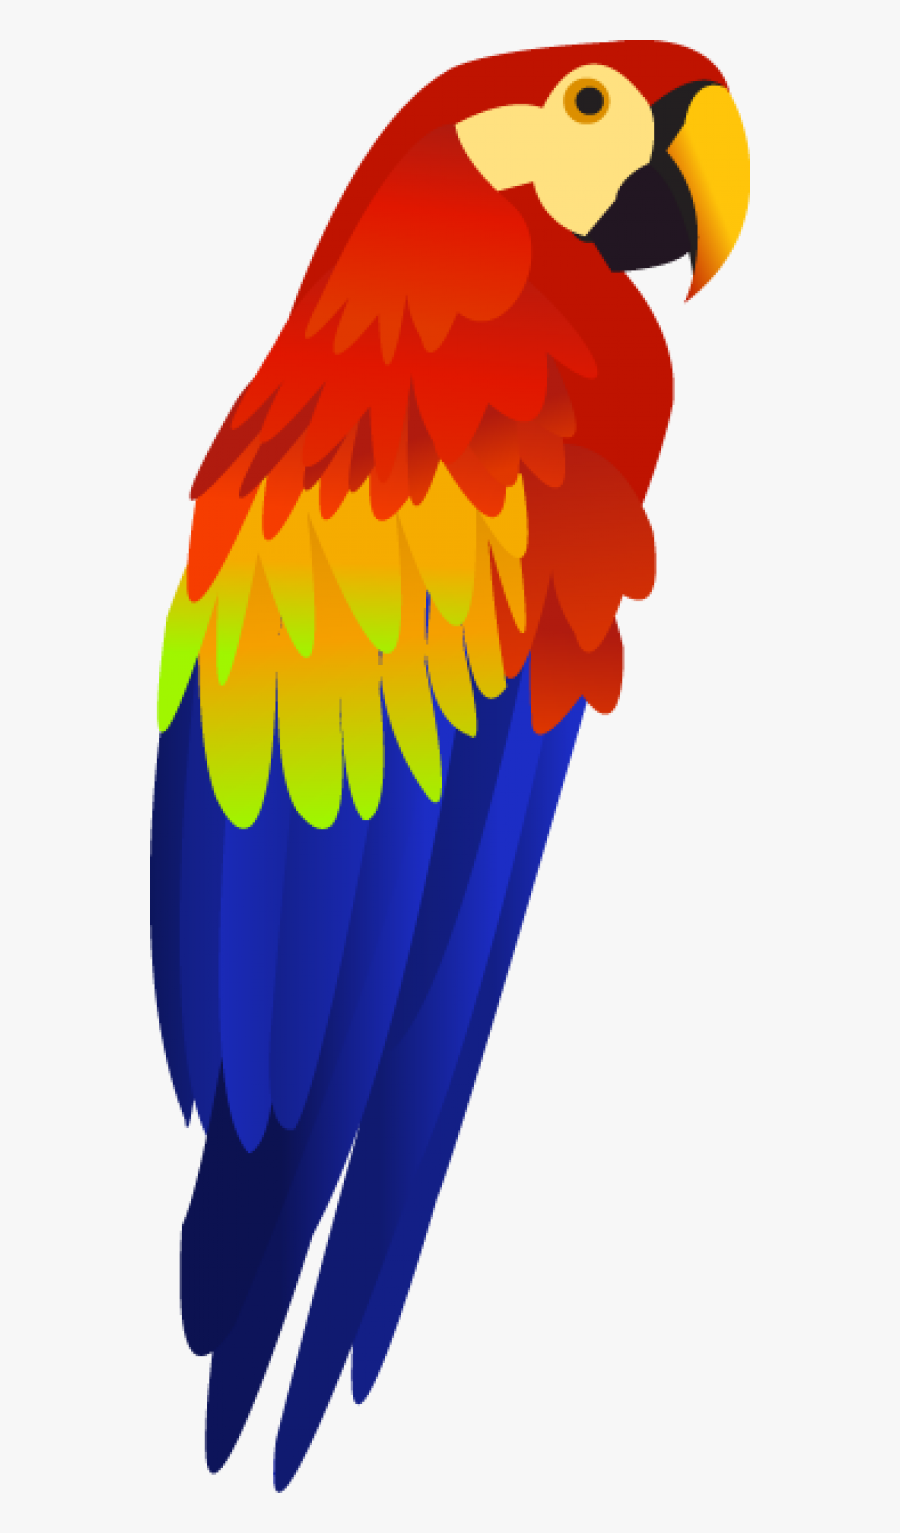 Parrot Png Free Download - Transparent Background Parrot Clipart, Transparent Clipart